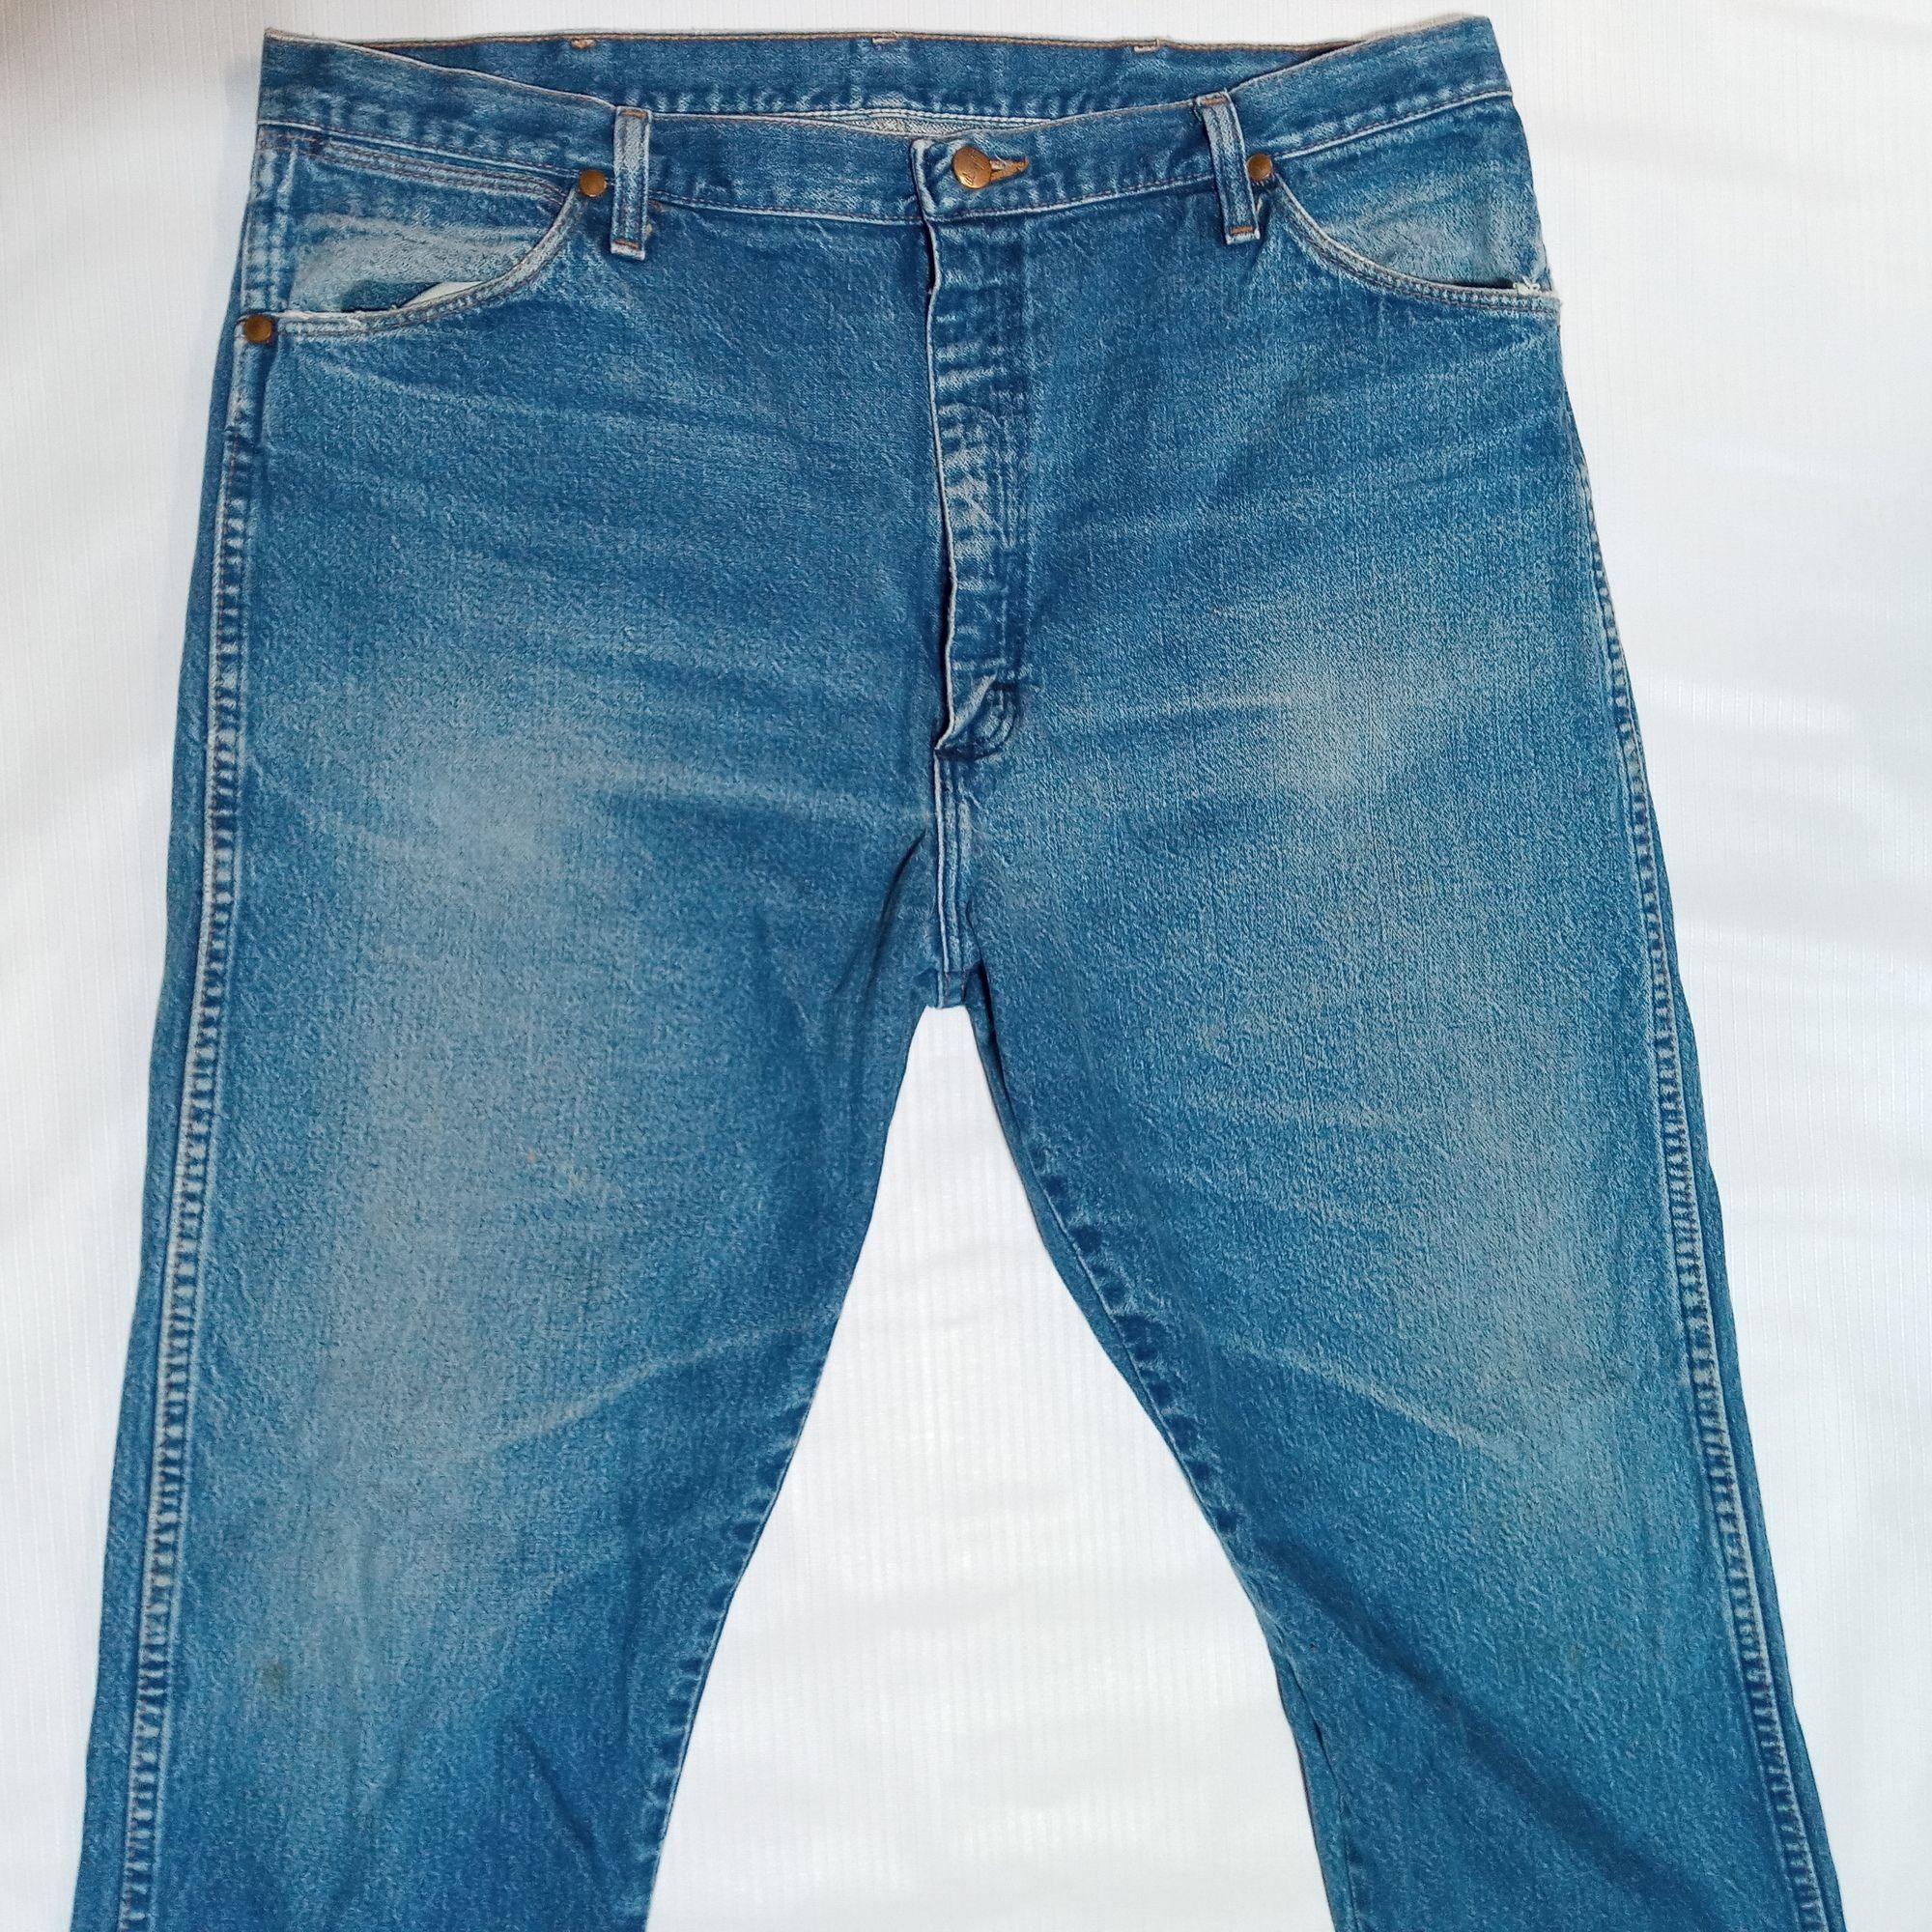 Wrangler Vintage Wrangler Mens Blue Jeans 37 x 28 Faded Worn Denim Co Size US 37 - 5 Thumbnail